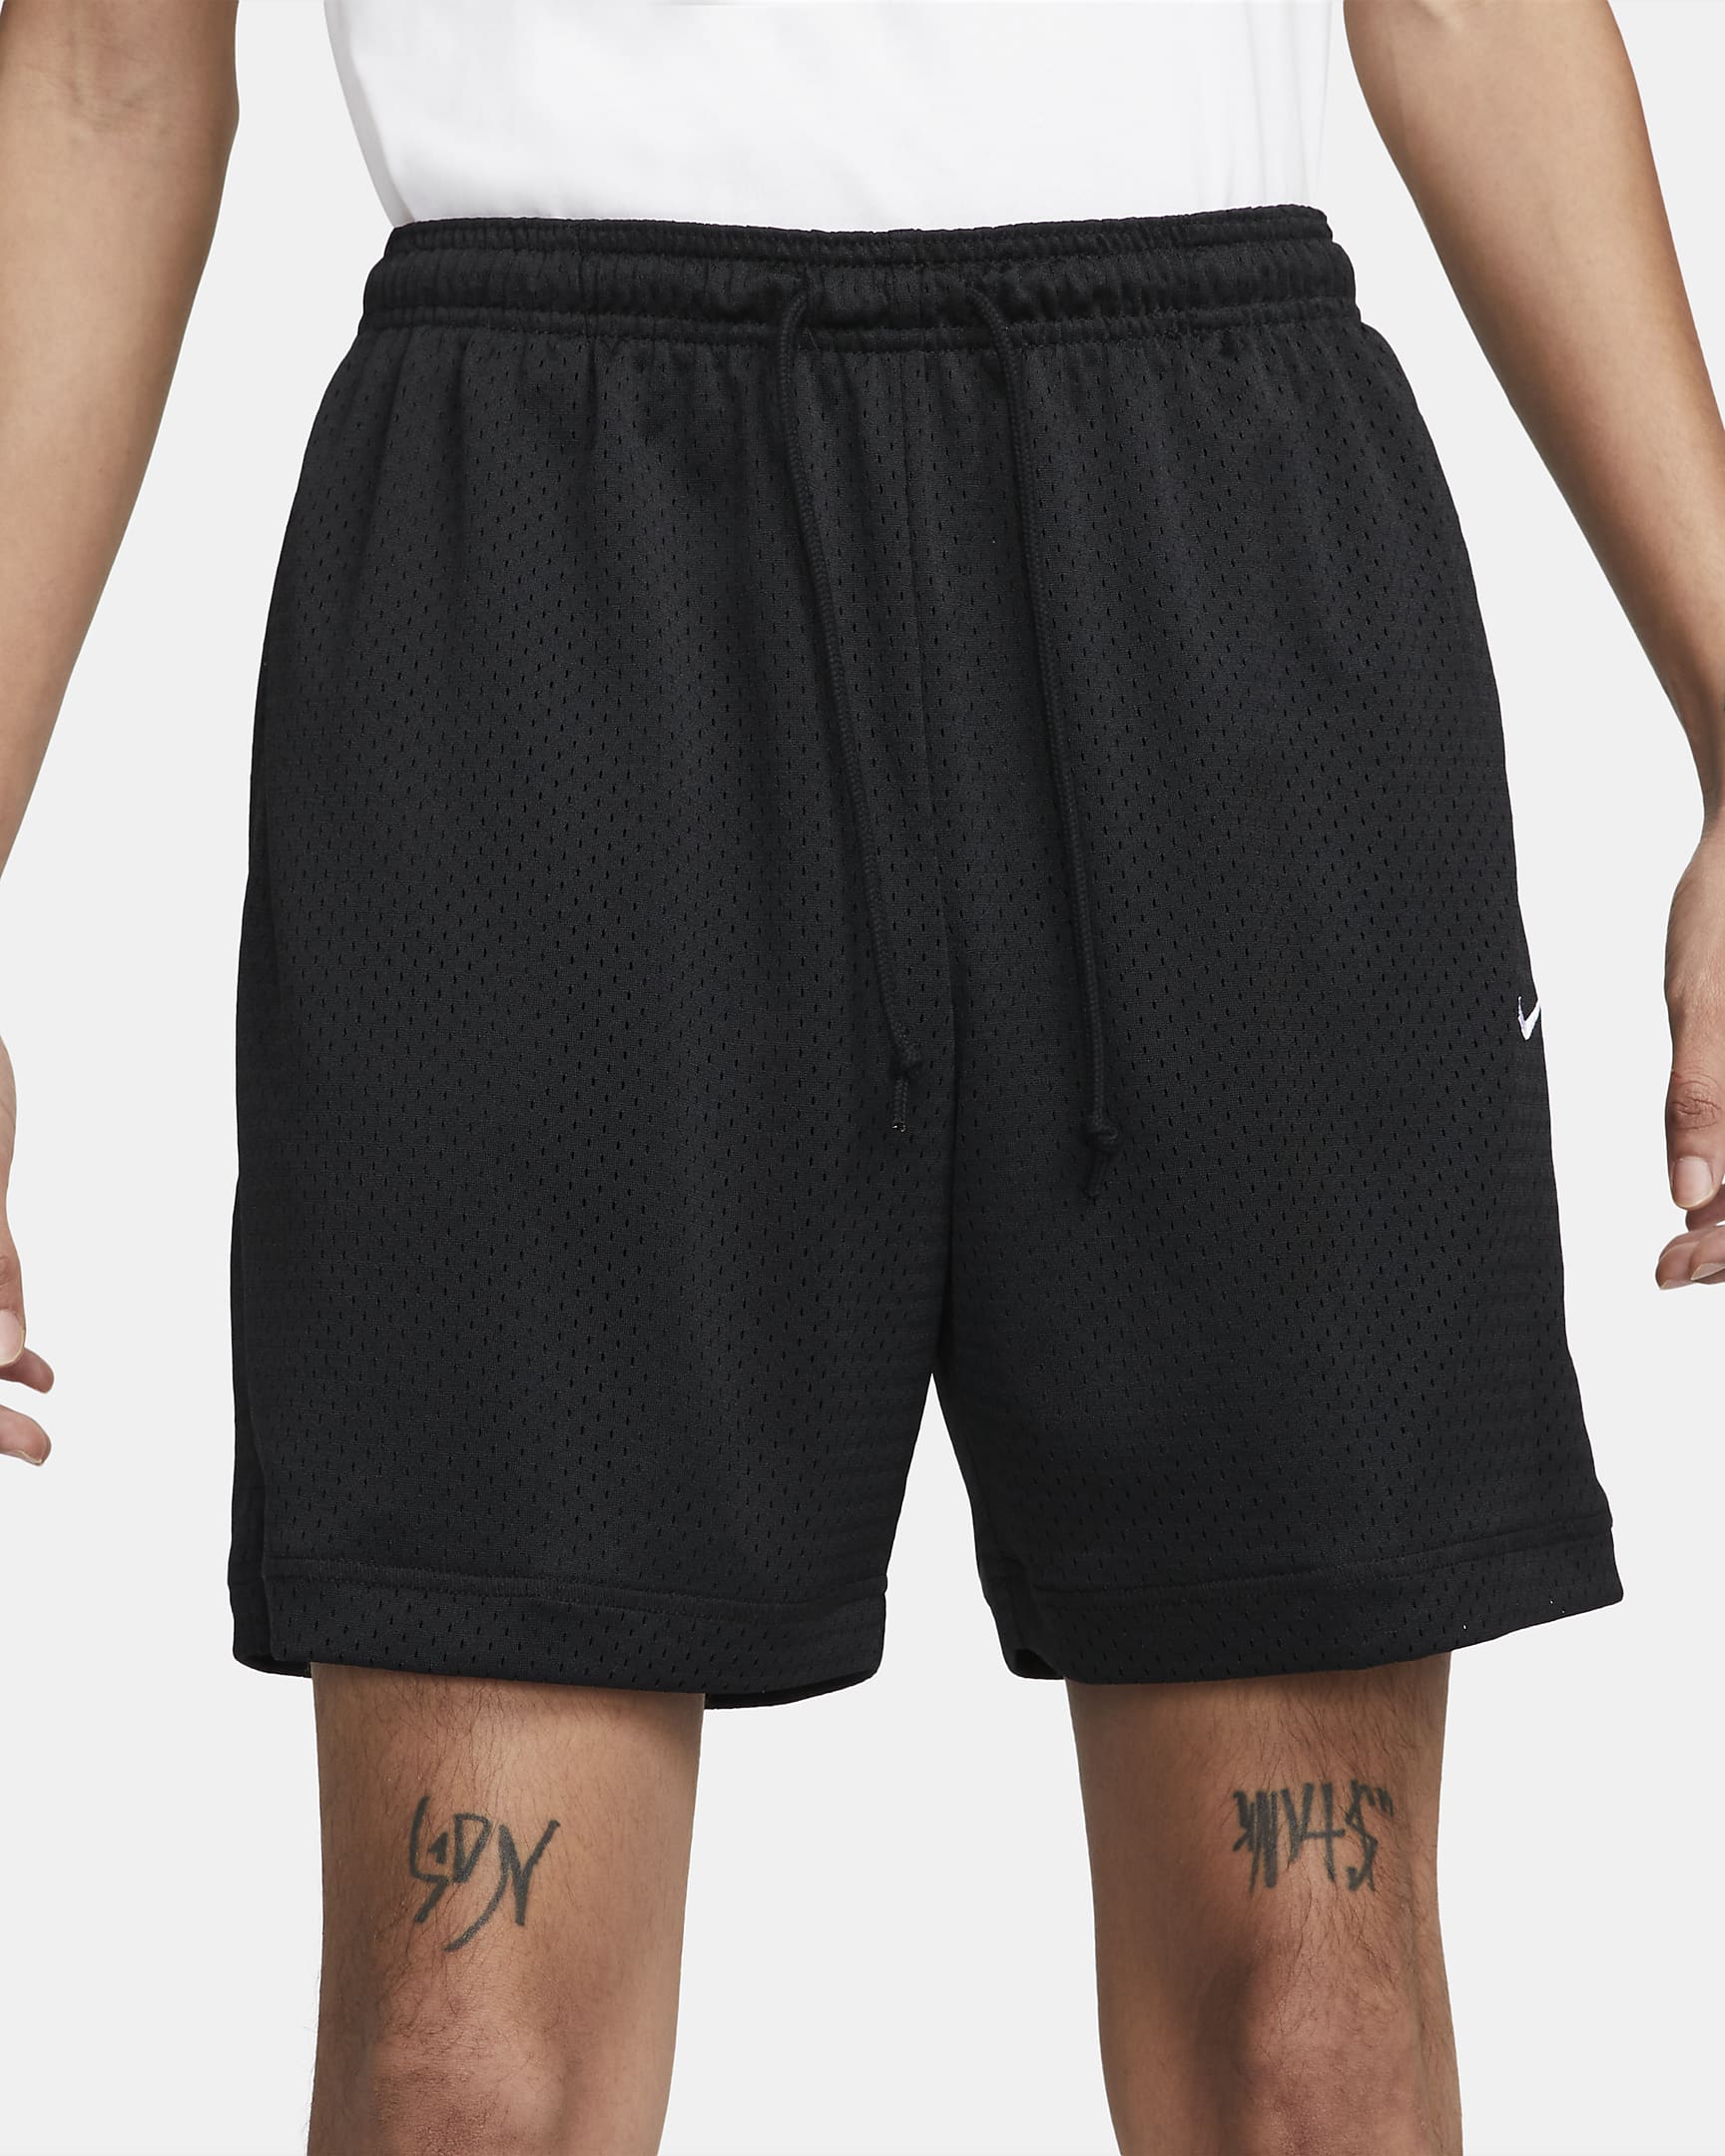 Nike Sportswear Authentics Men's Mesh Shorts. Nike.com